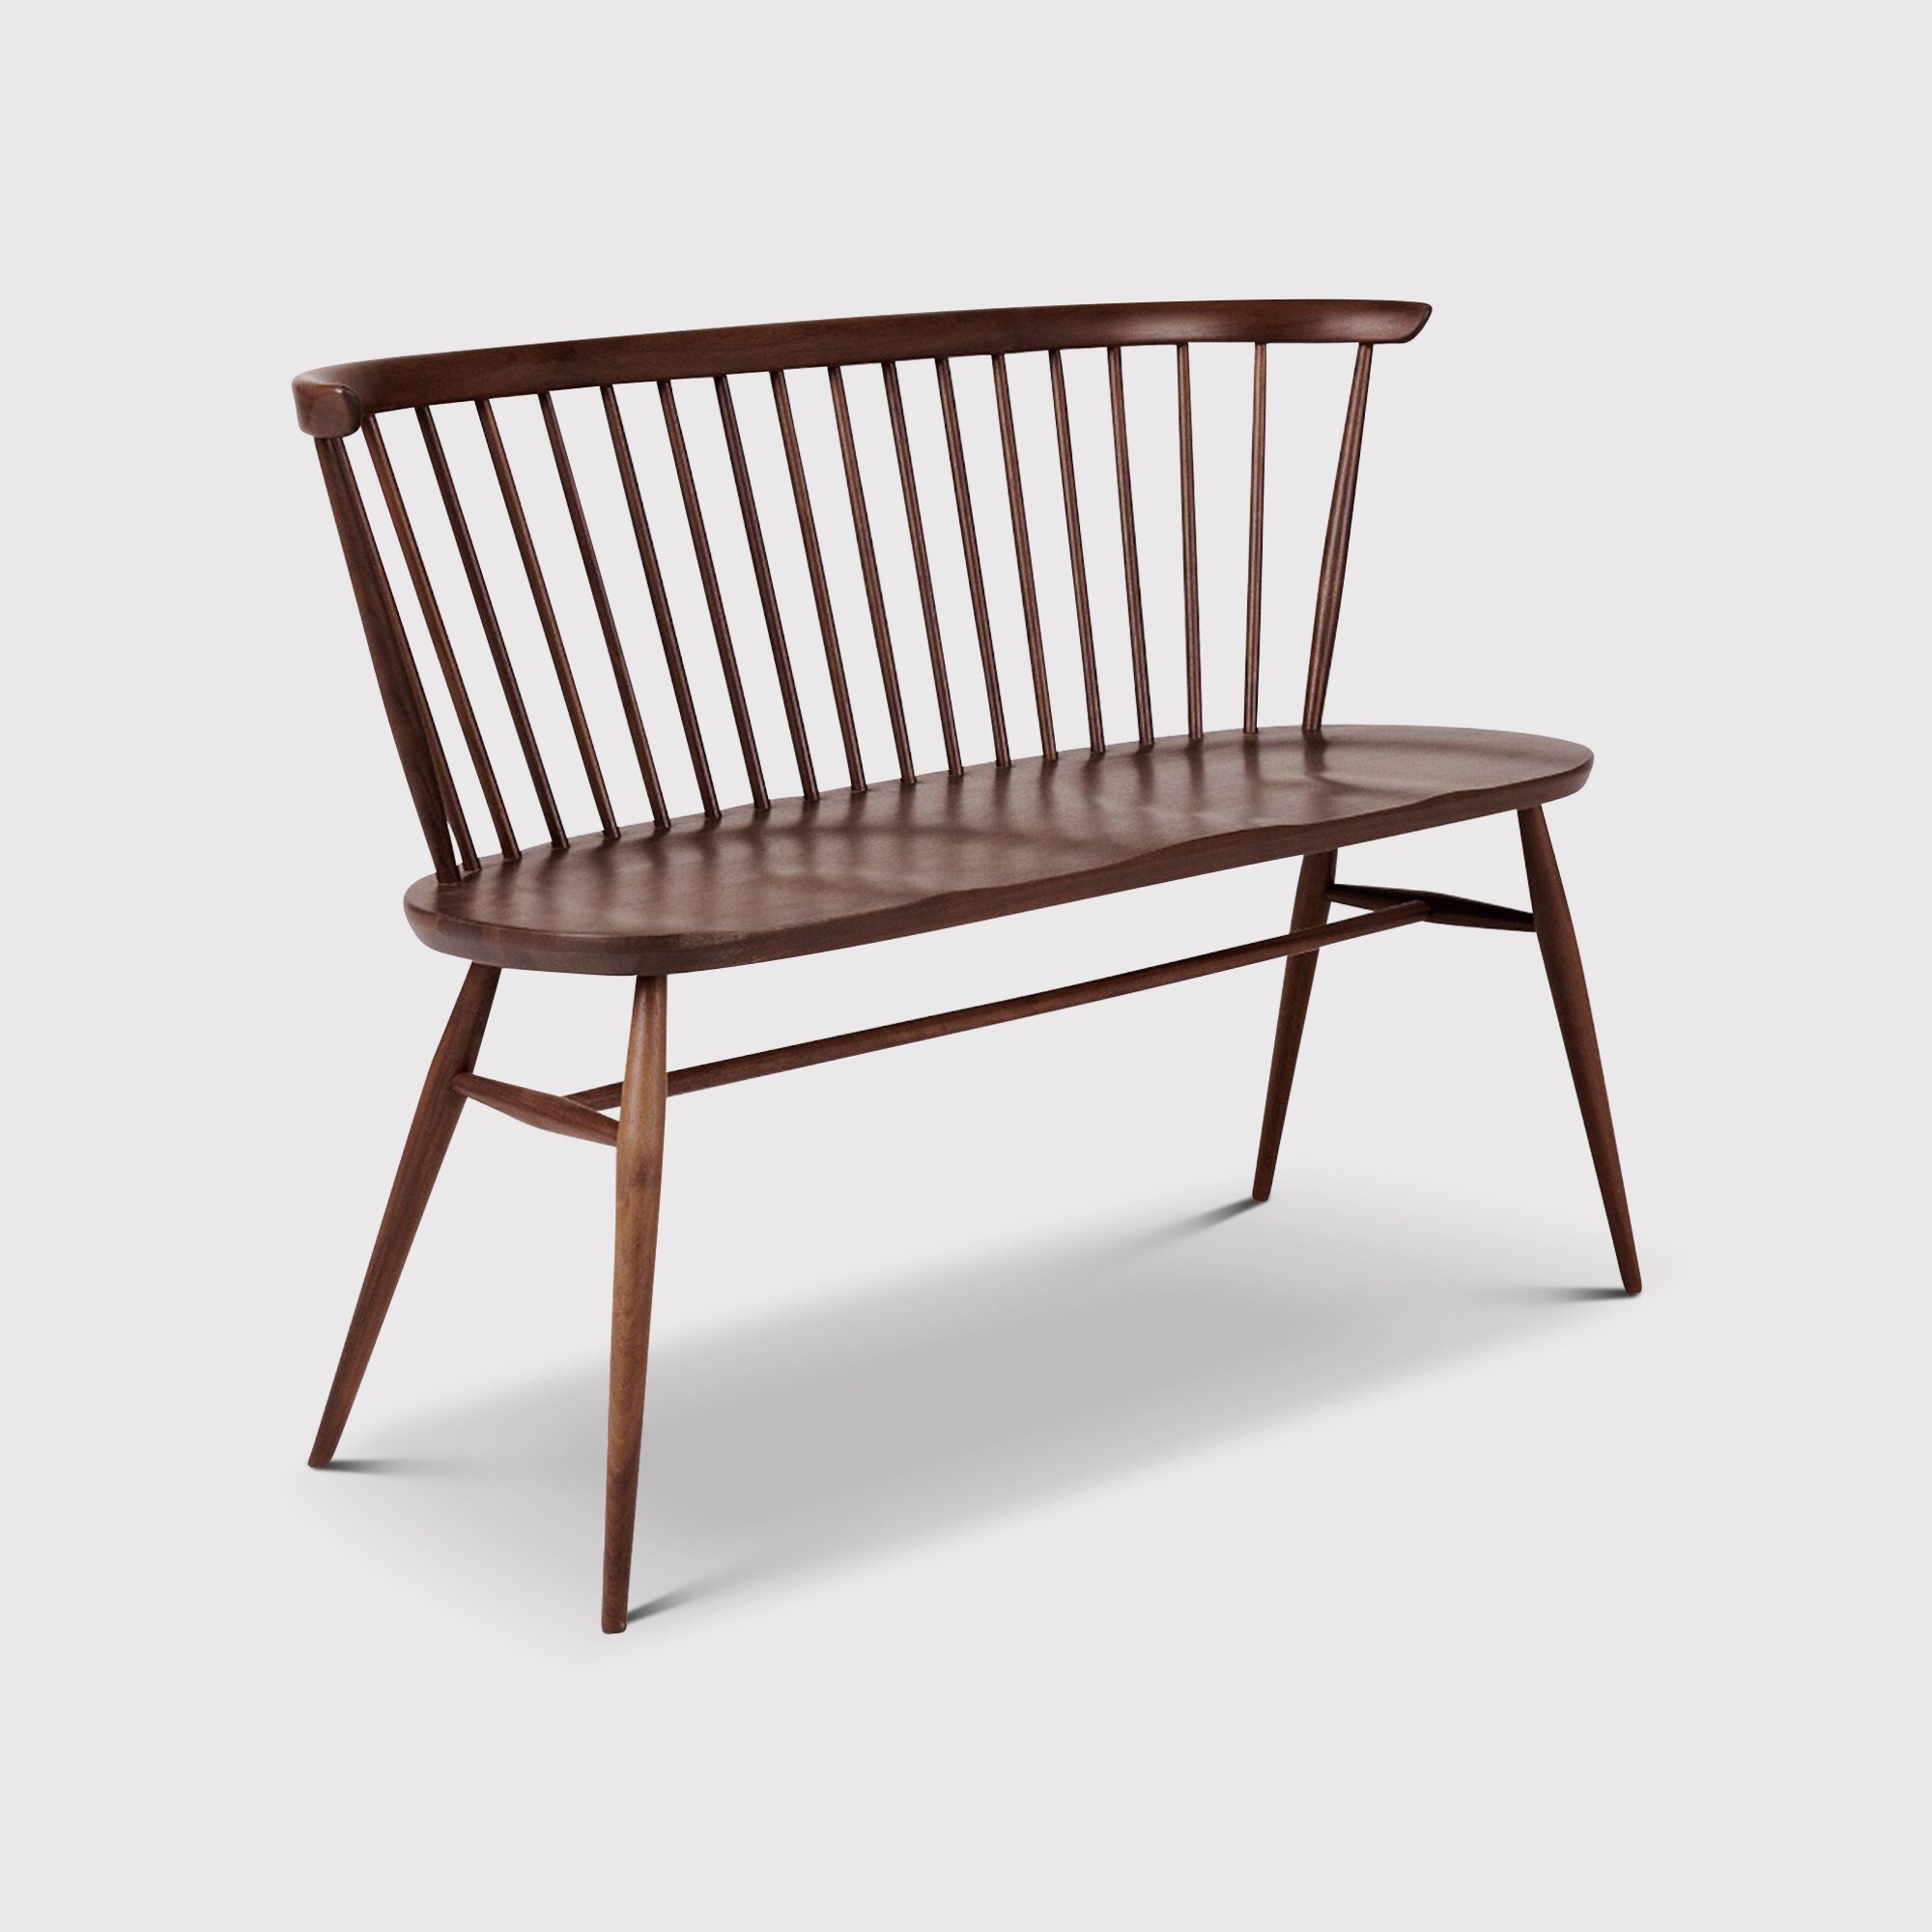 L.Ercolani Love Seat Bench Sofa, Timber Wood | Barker & Stonehouse